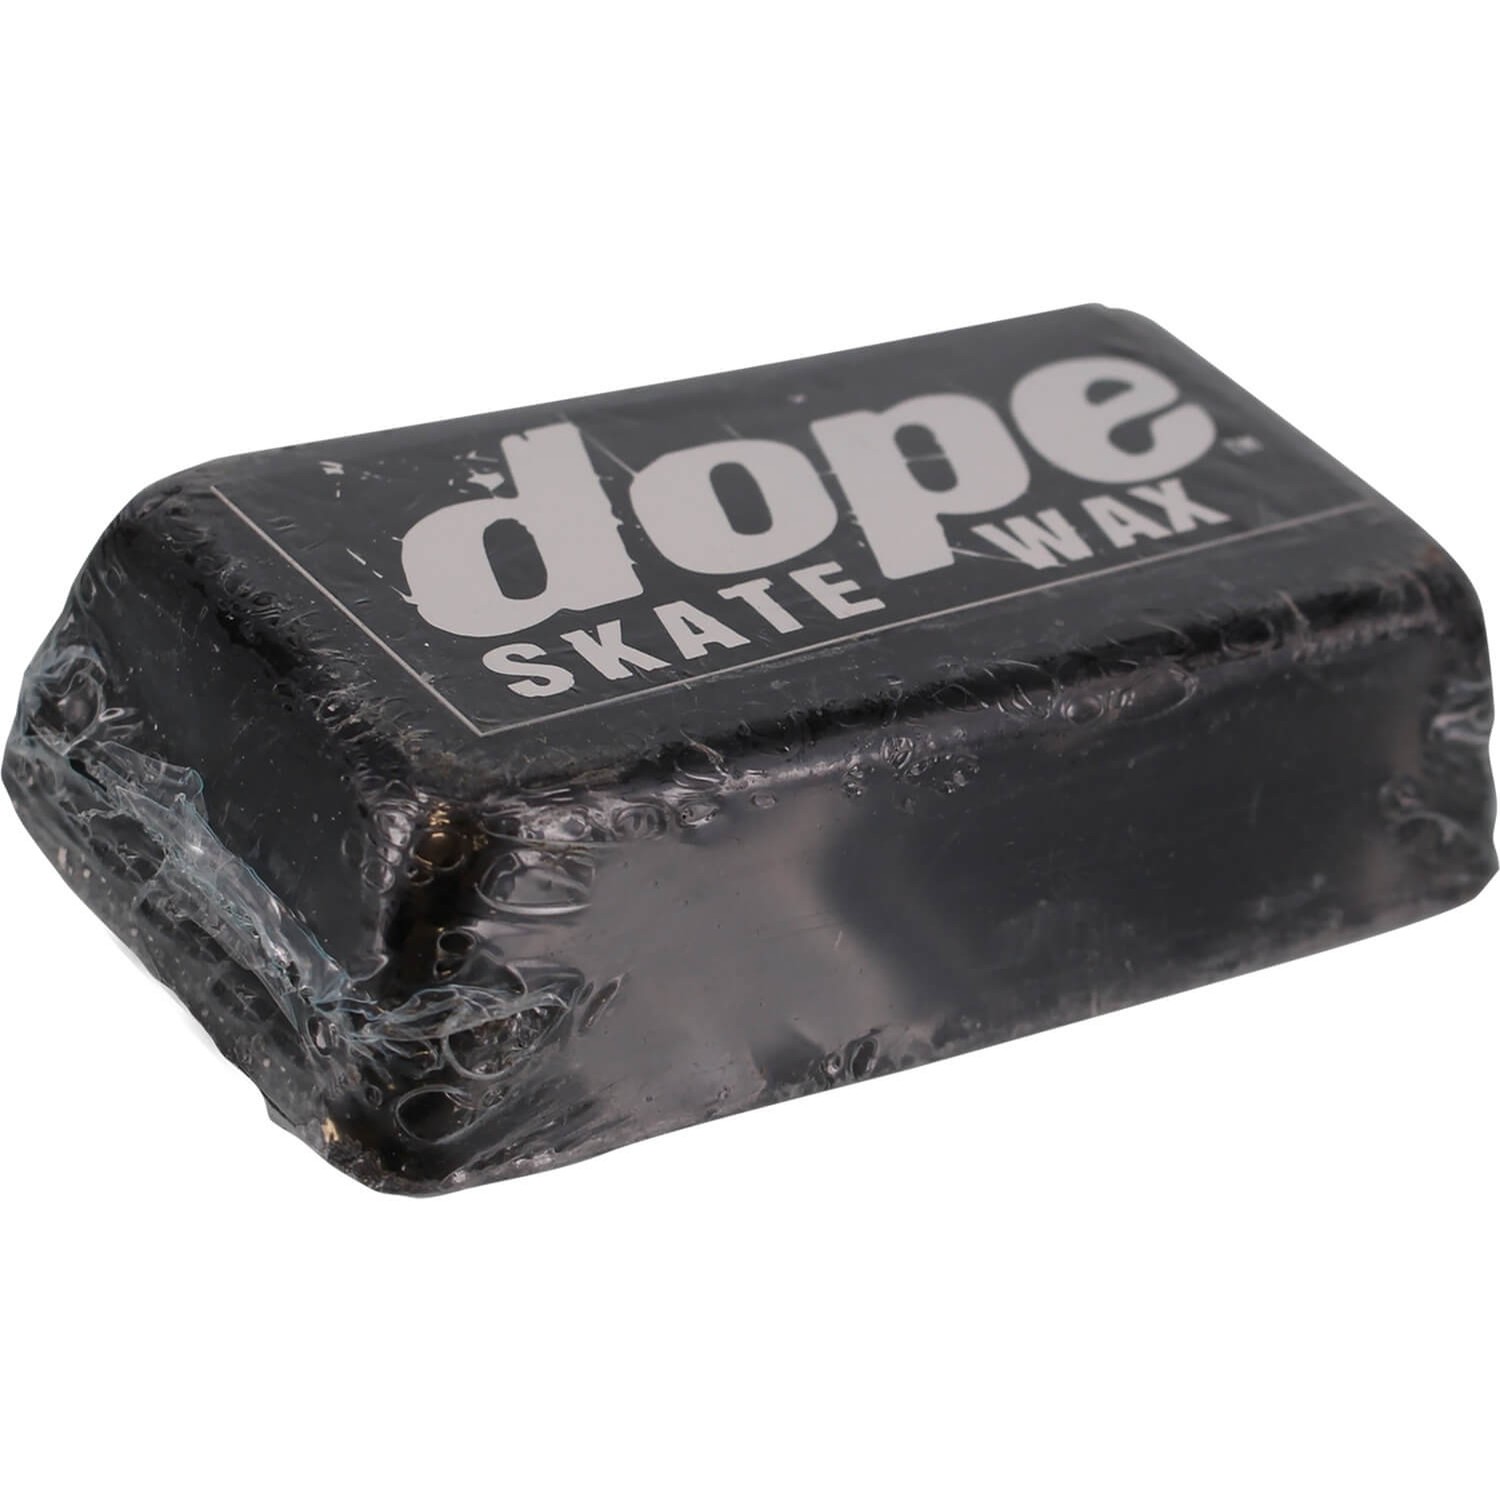 Dope Skatewax Brick (Black) Accessories Skate Wax at Cal Surf